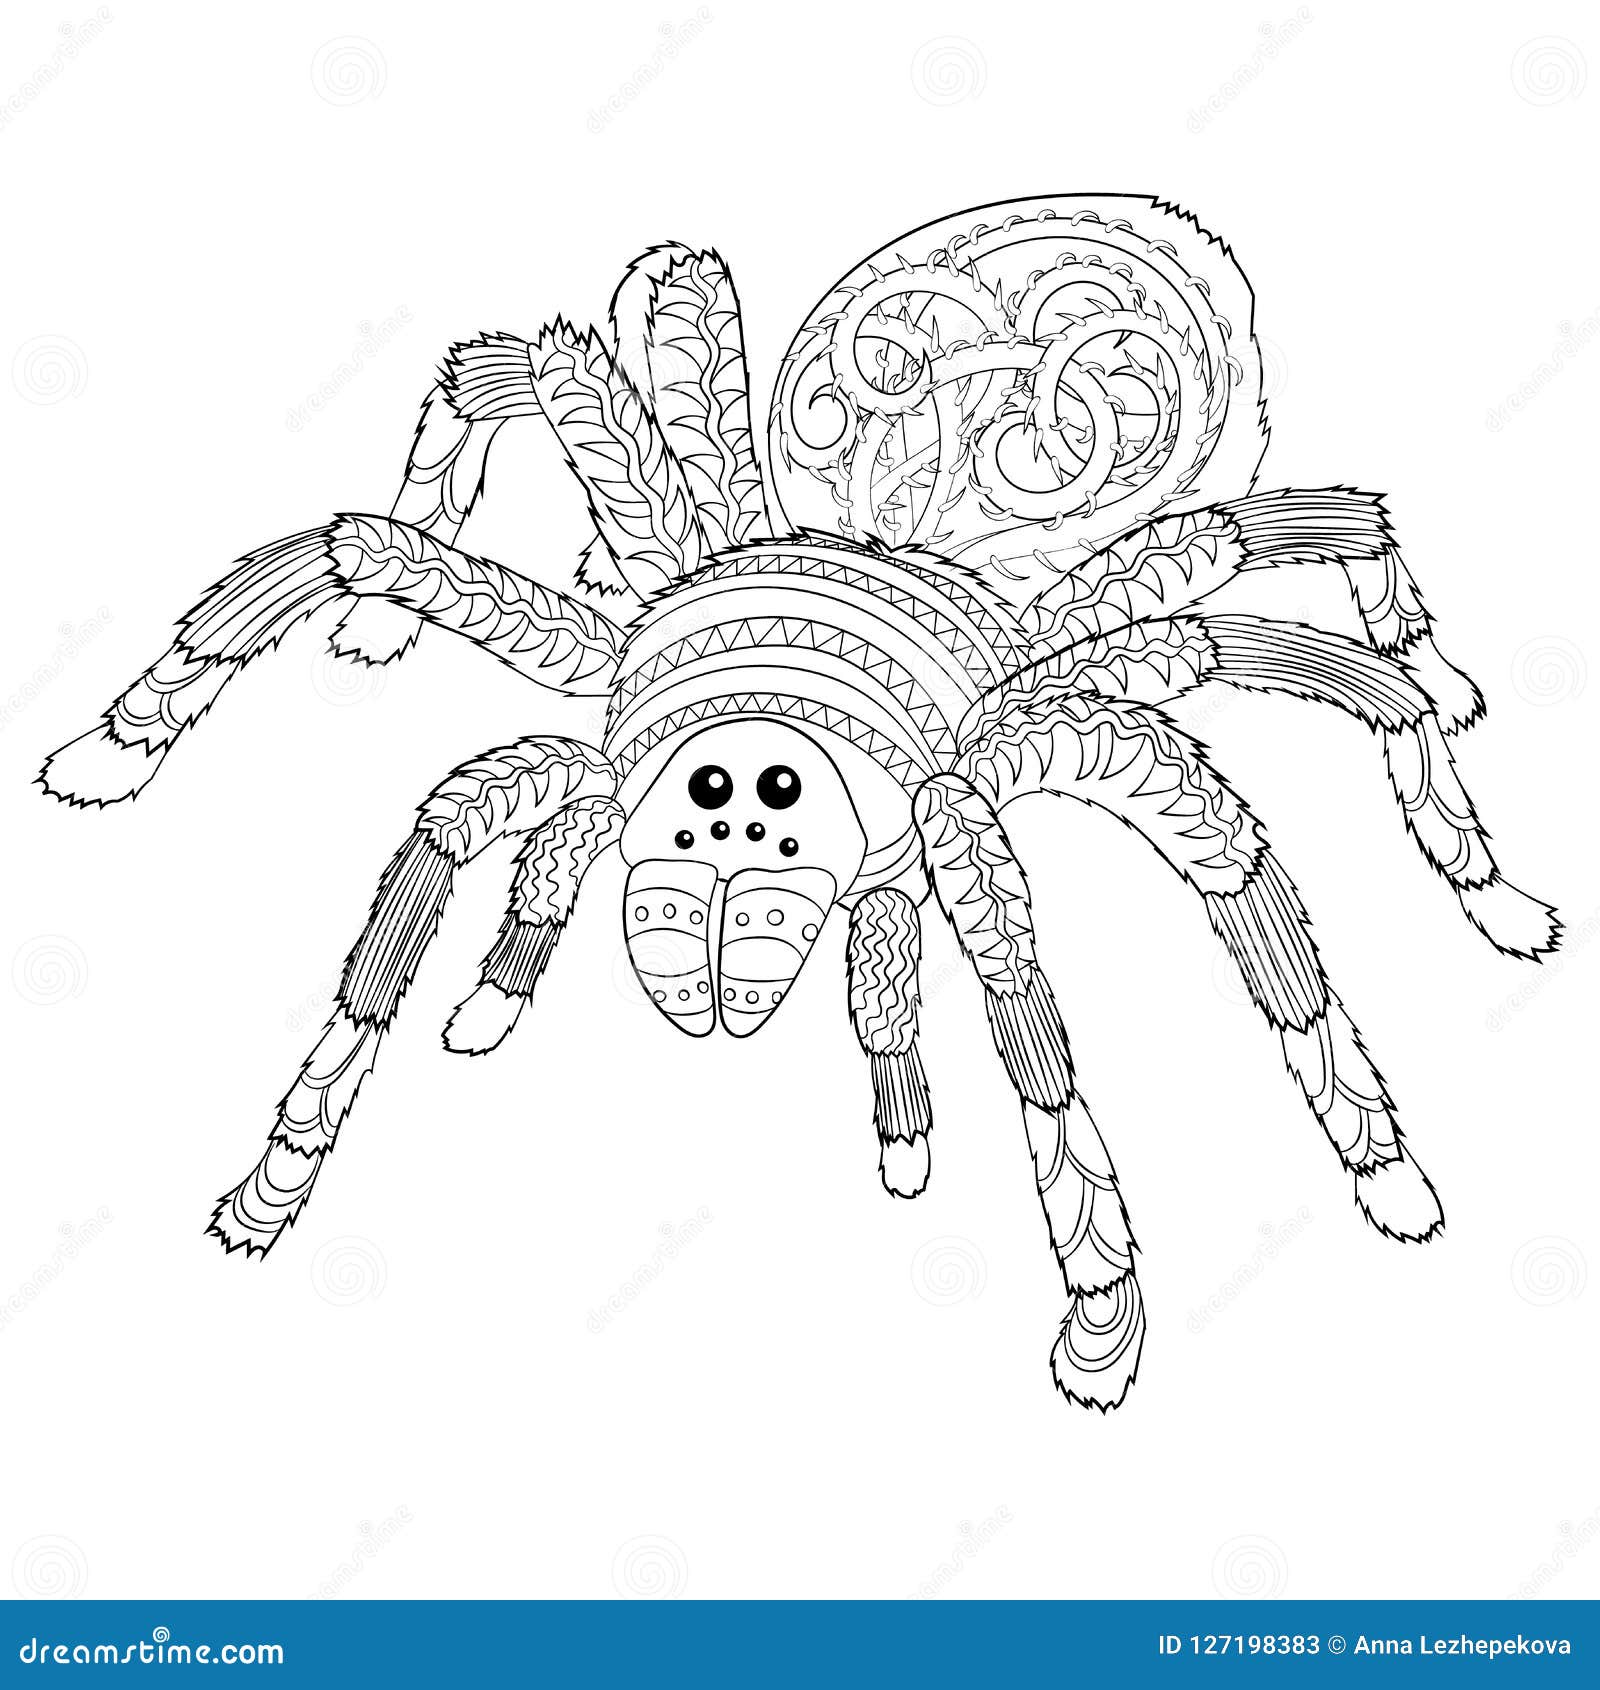 Spider coloring stock illustrations â spider coloring stock illustrations vectors clipart